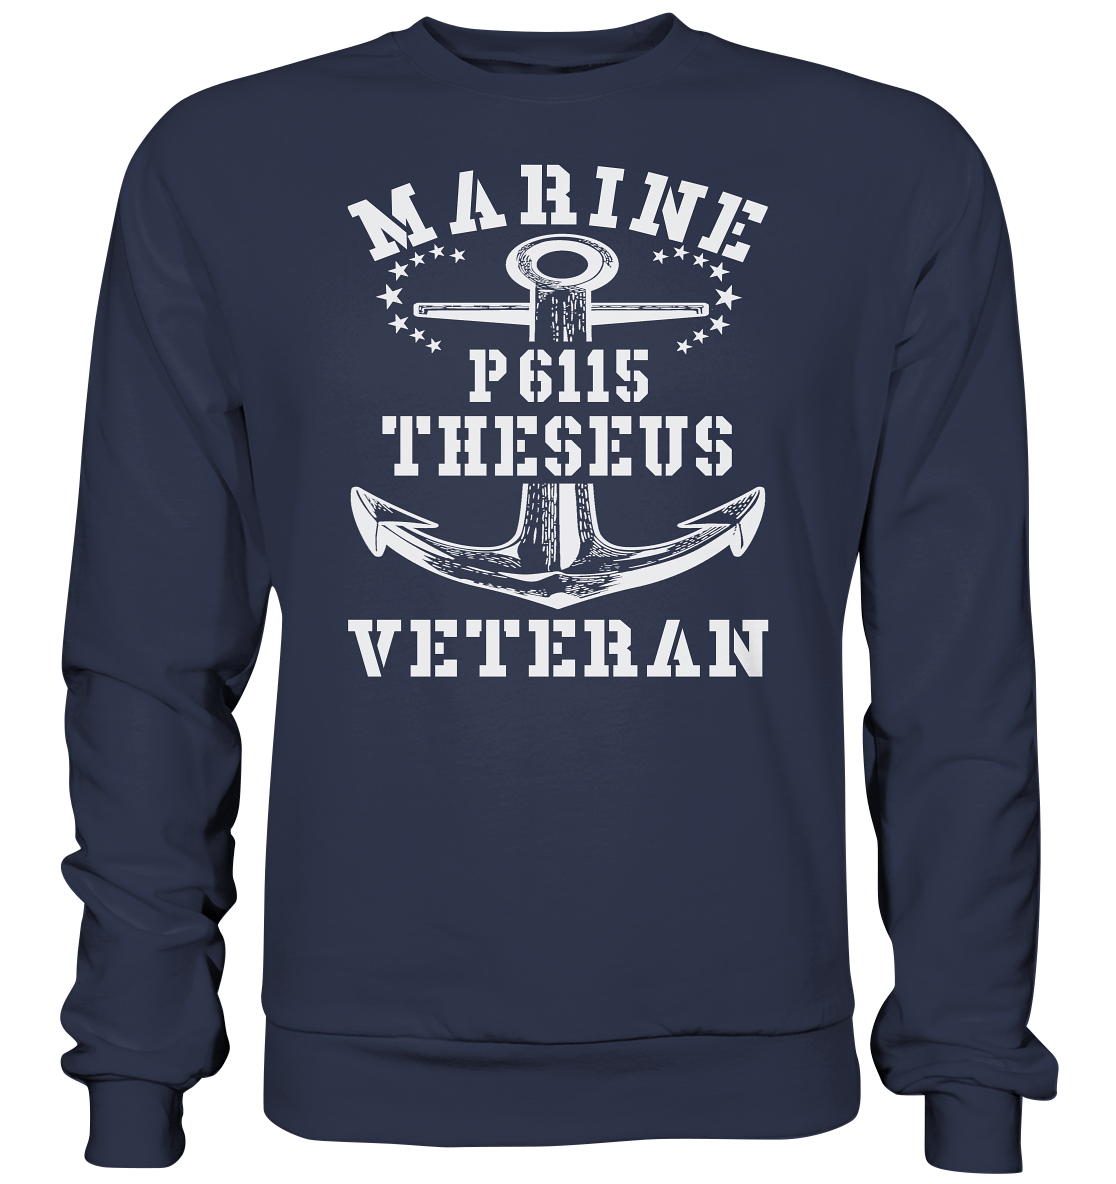 U-Jagdboot P6056 THESEUS Marine Veteran - Premium Sweatshirt